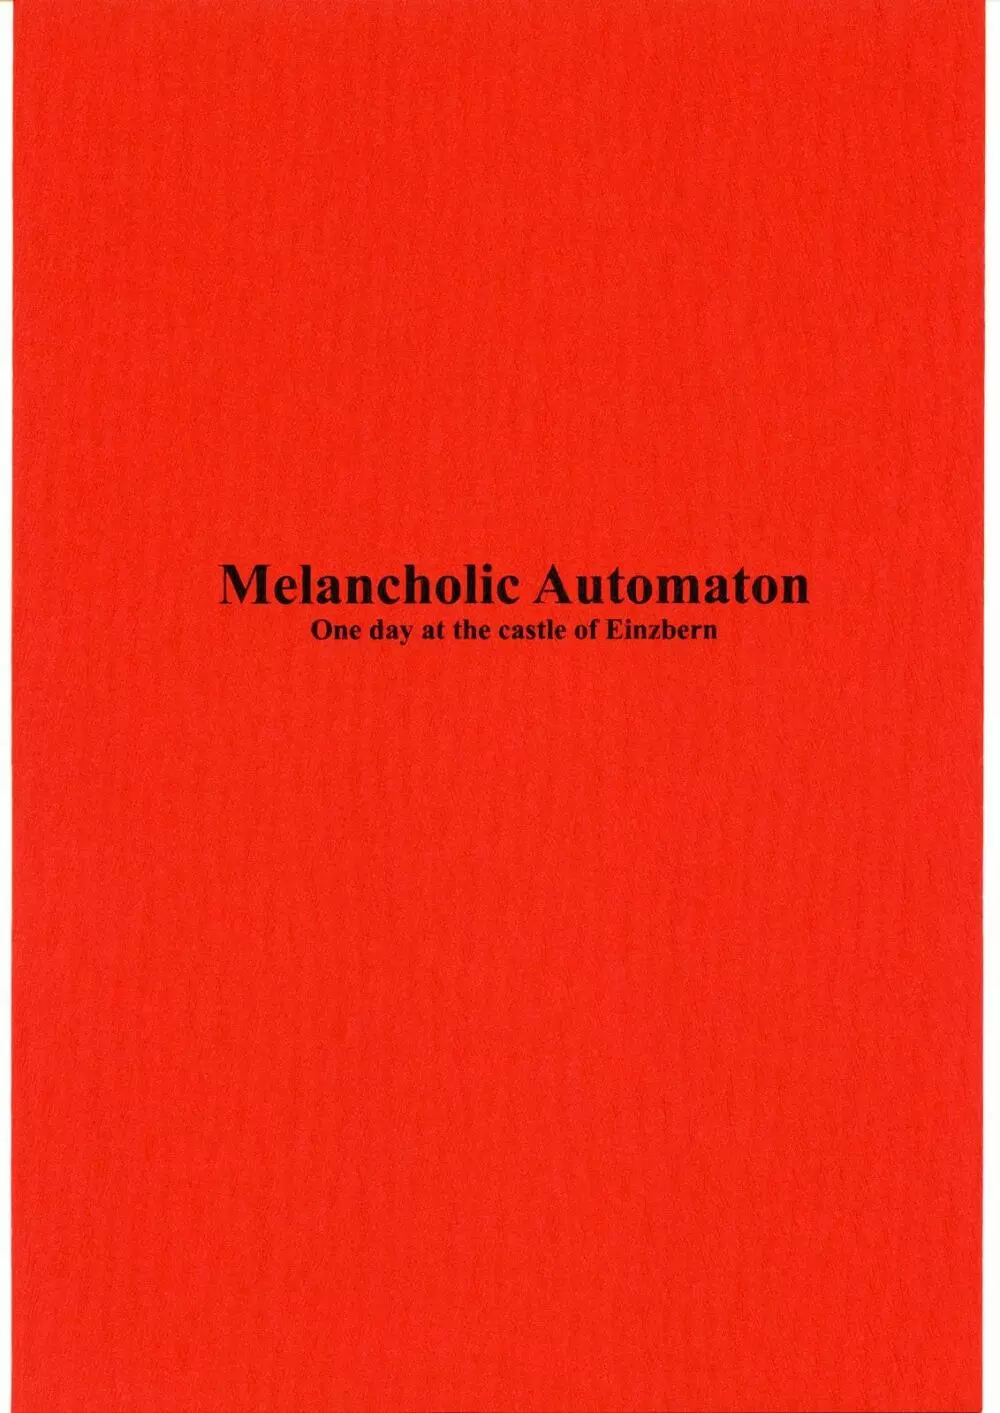 Melancholic Automaton – One day at the castle of Einzbern